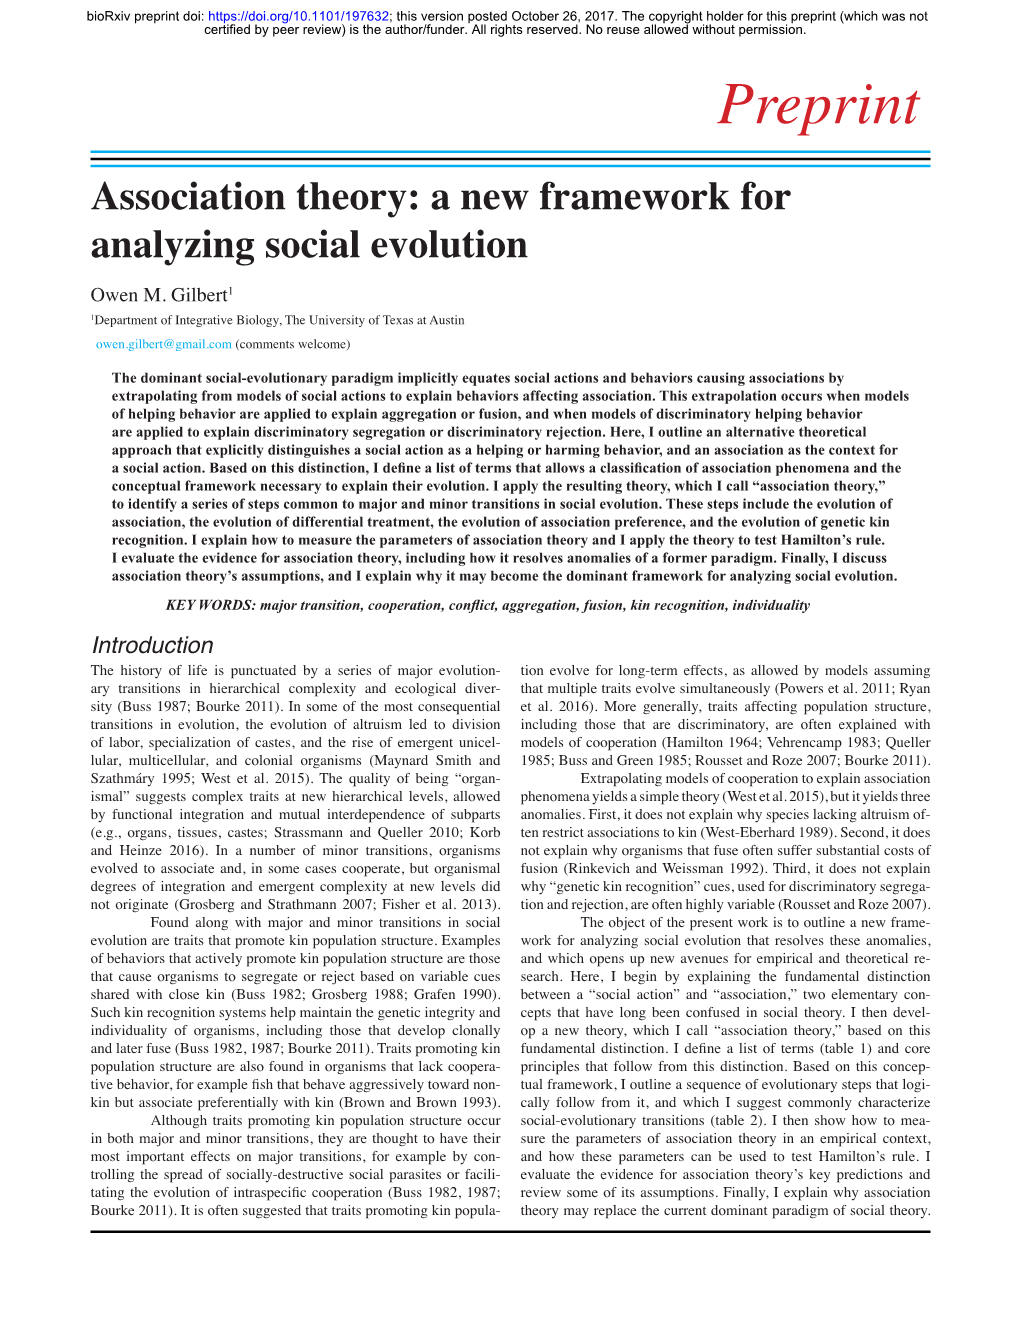 Association Theory: a New Framework for Analyzing Social Evolution Owen M